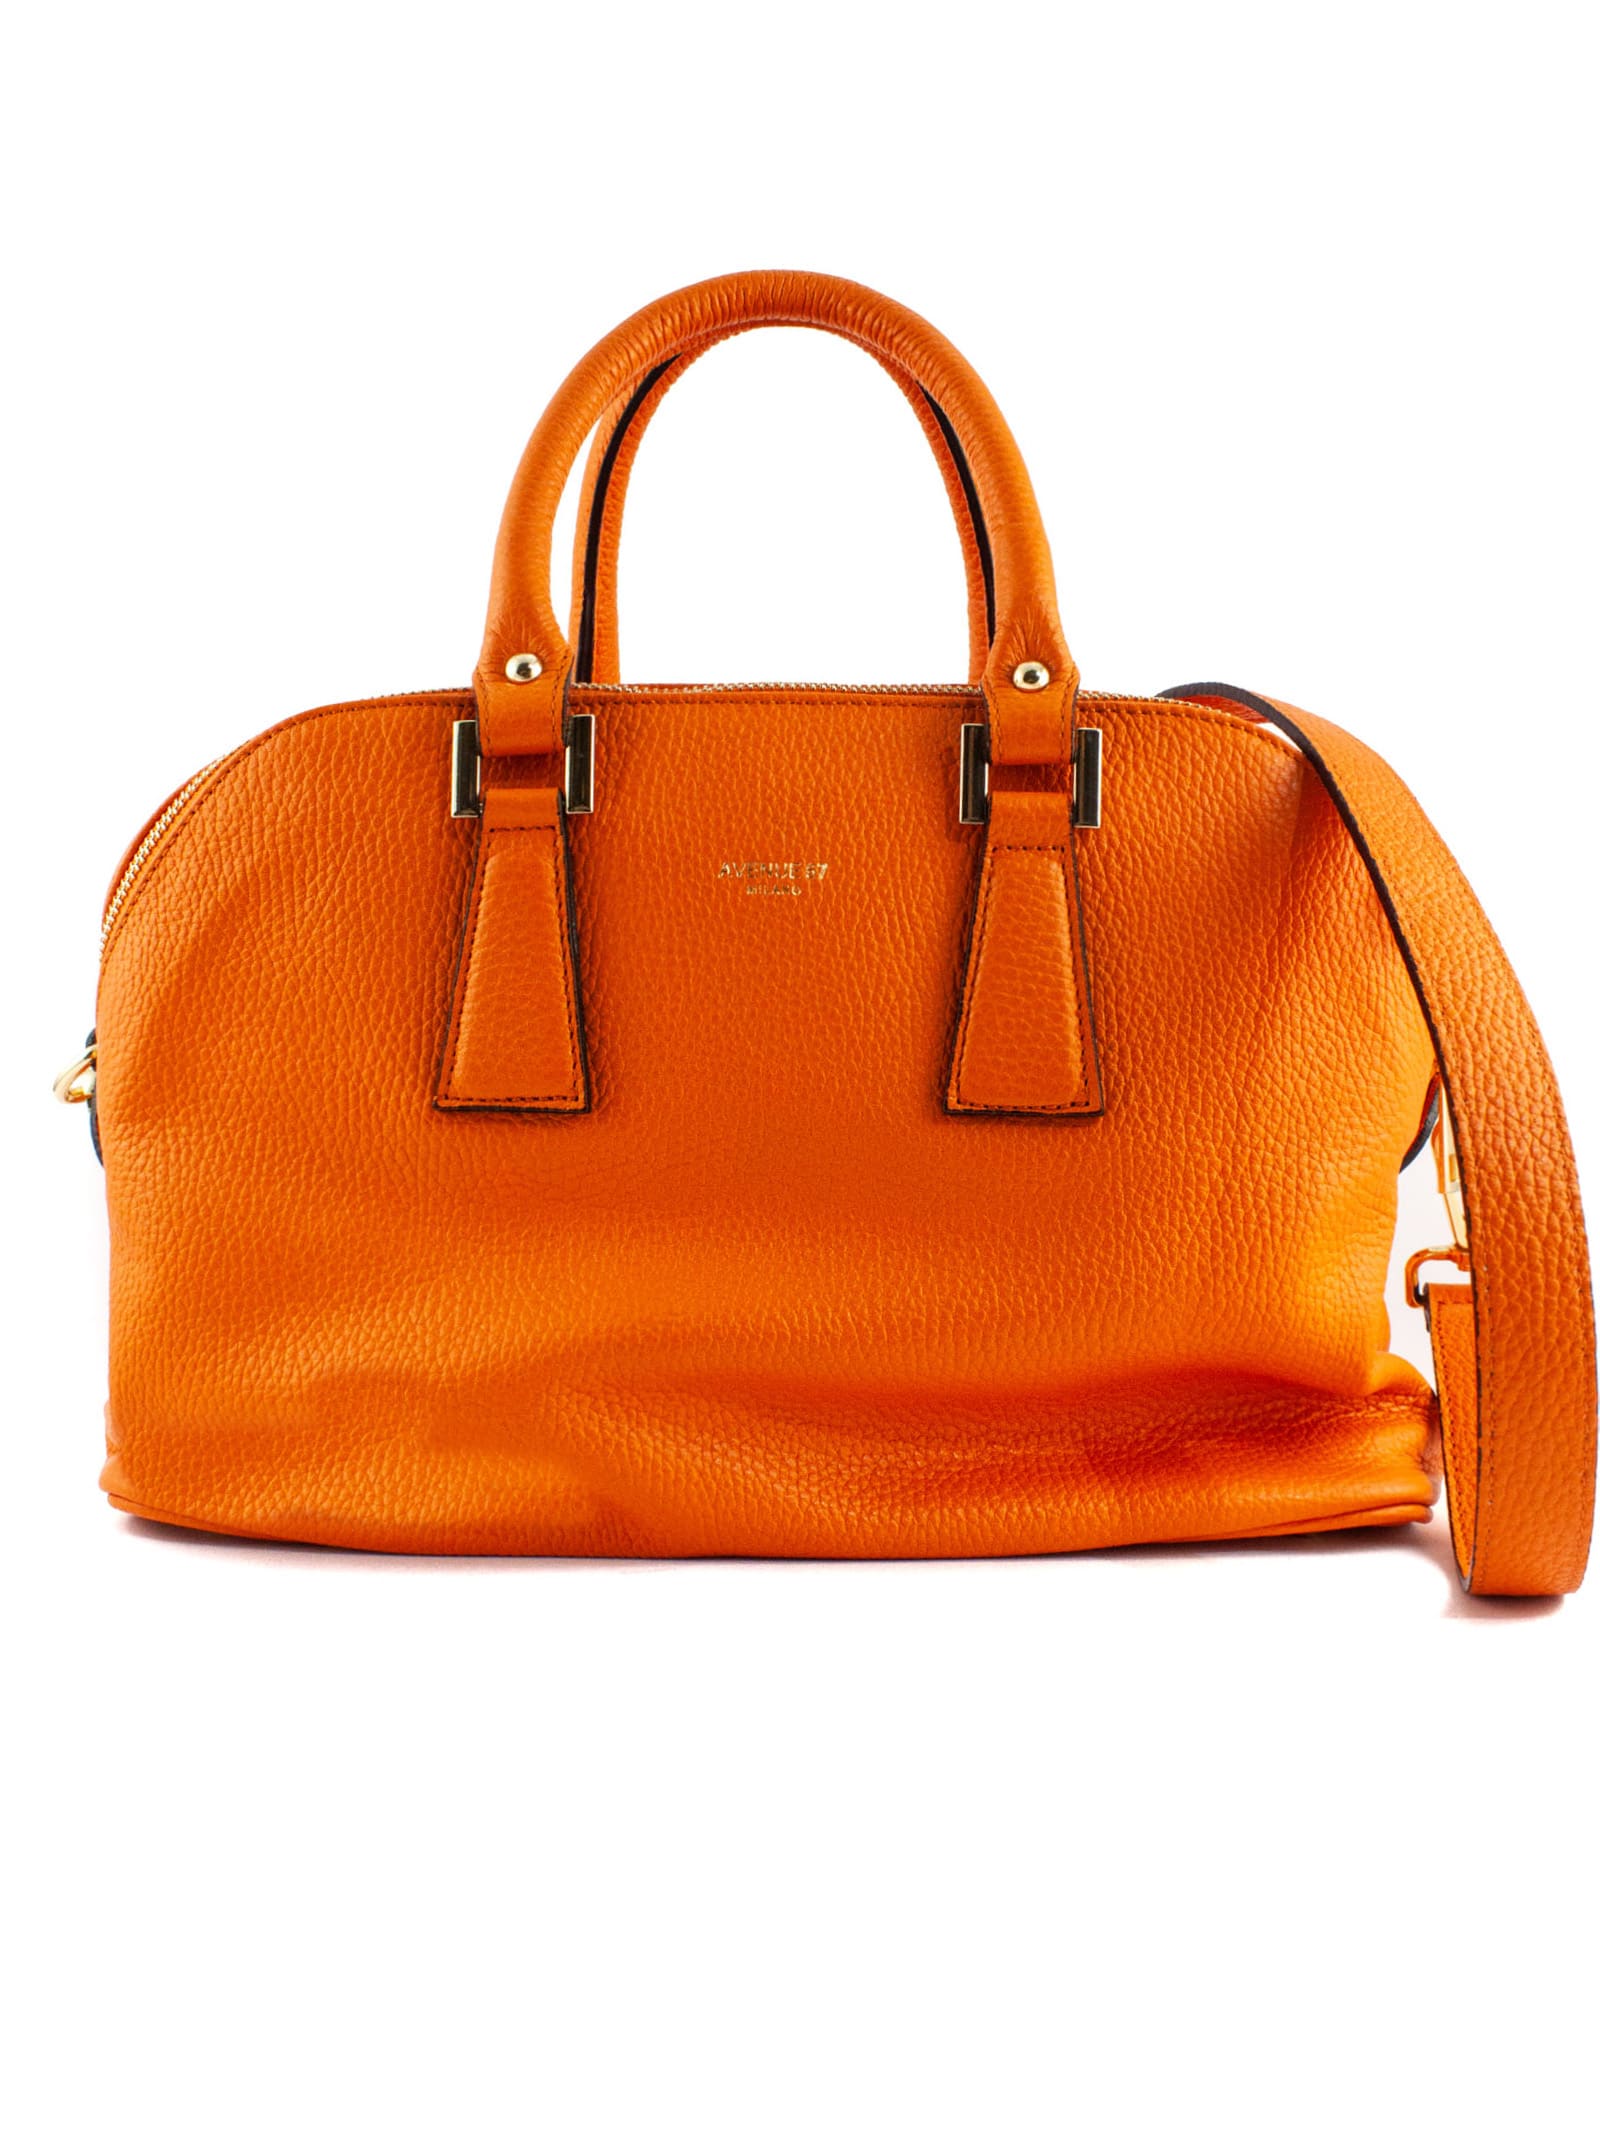 Avenue 67 Fandango Xs Shoulder Bag In Orange Leather